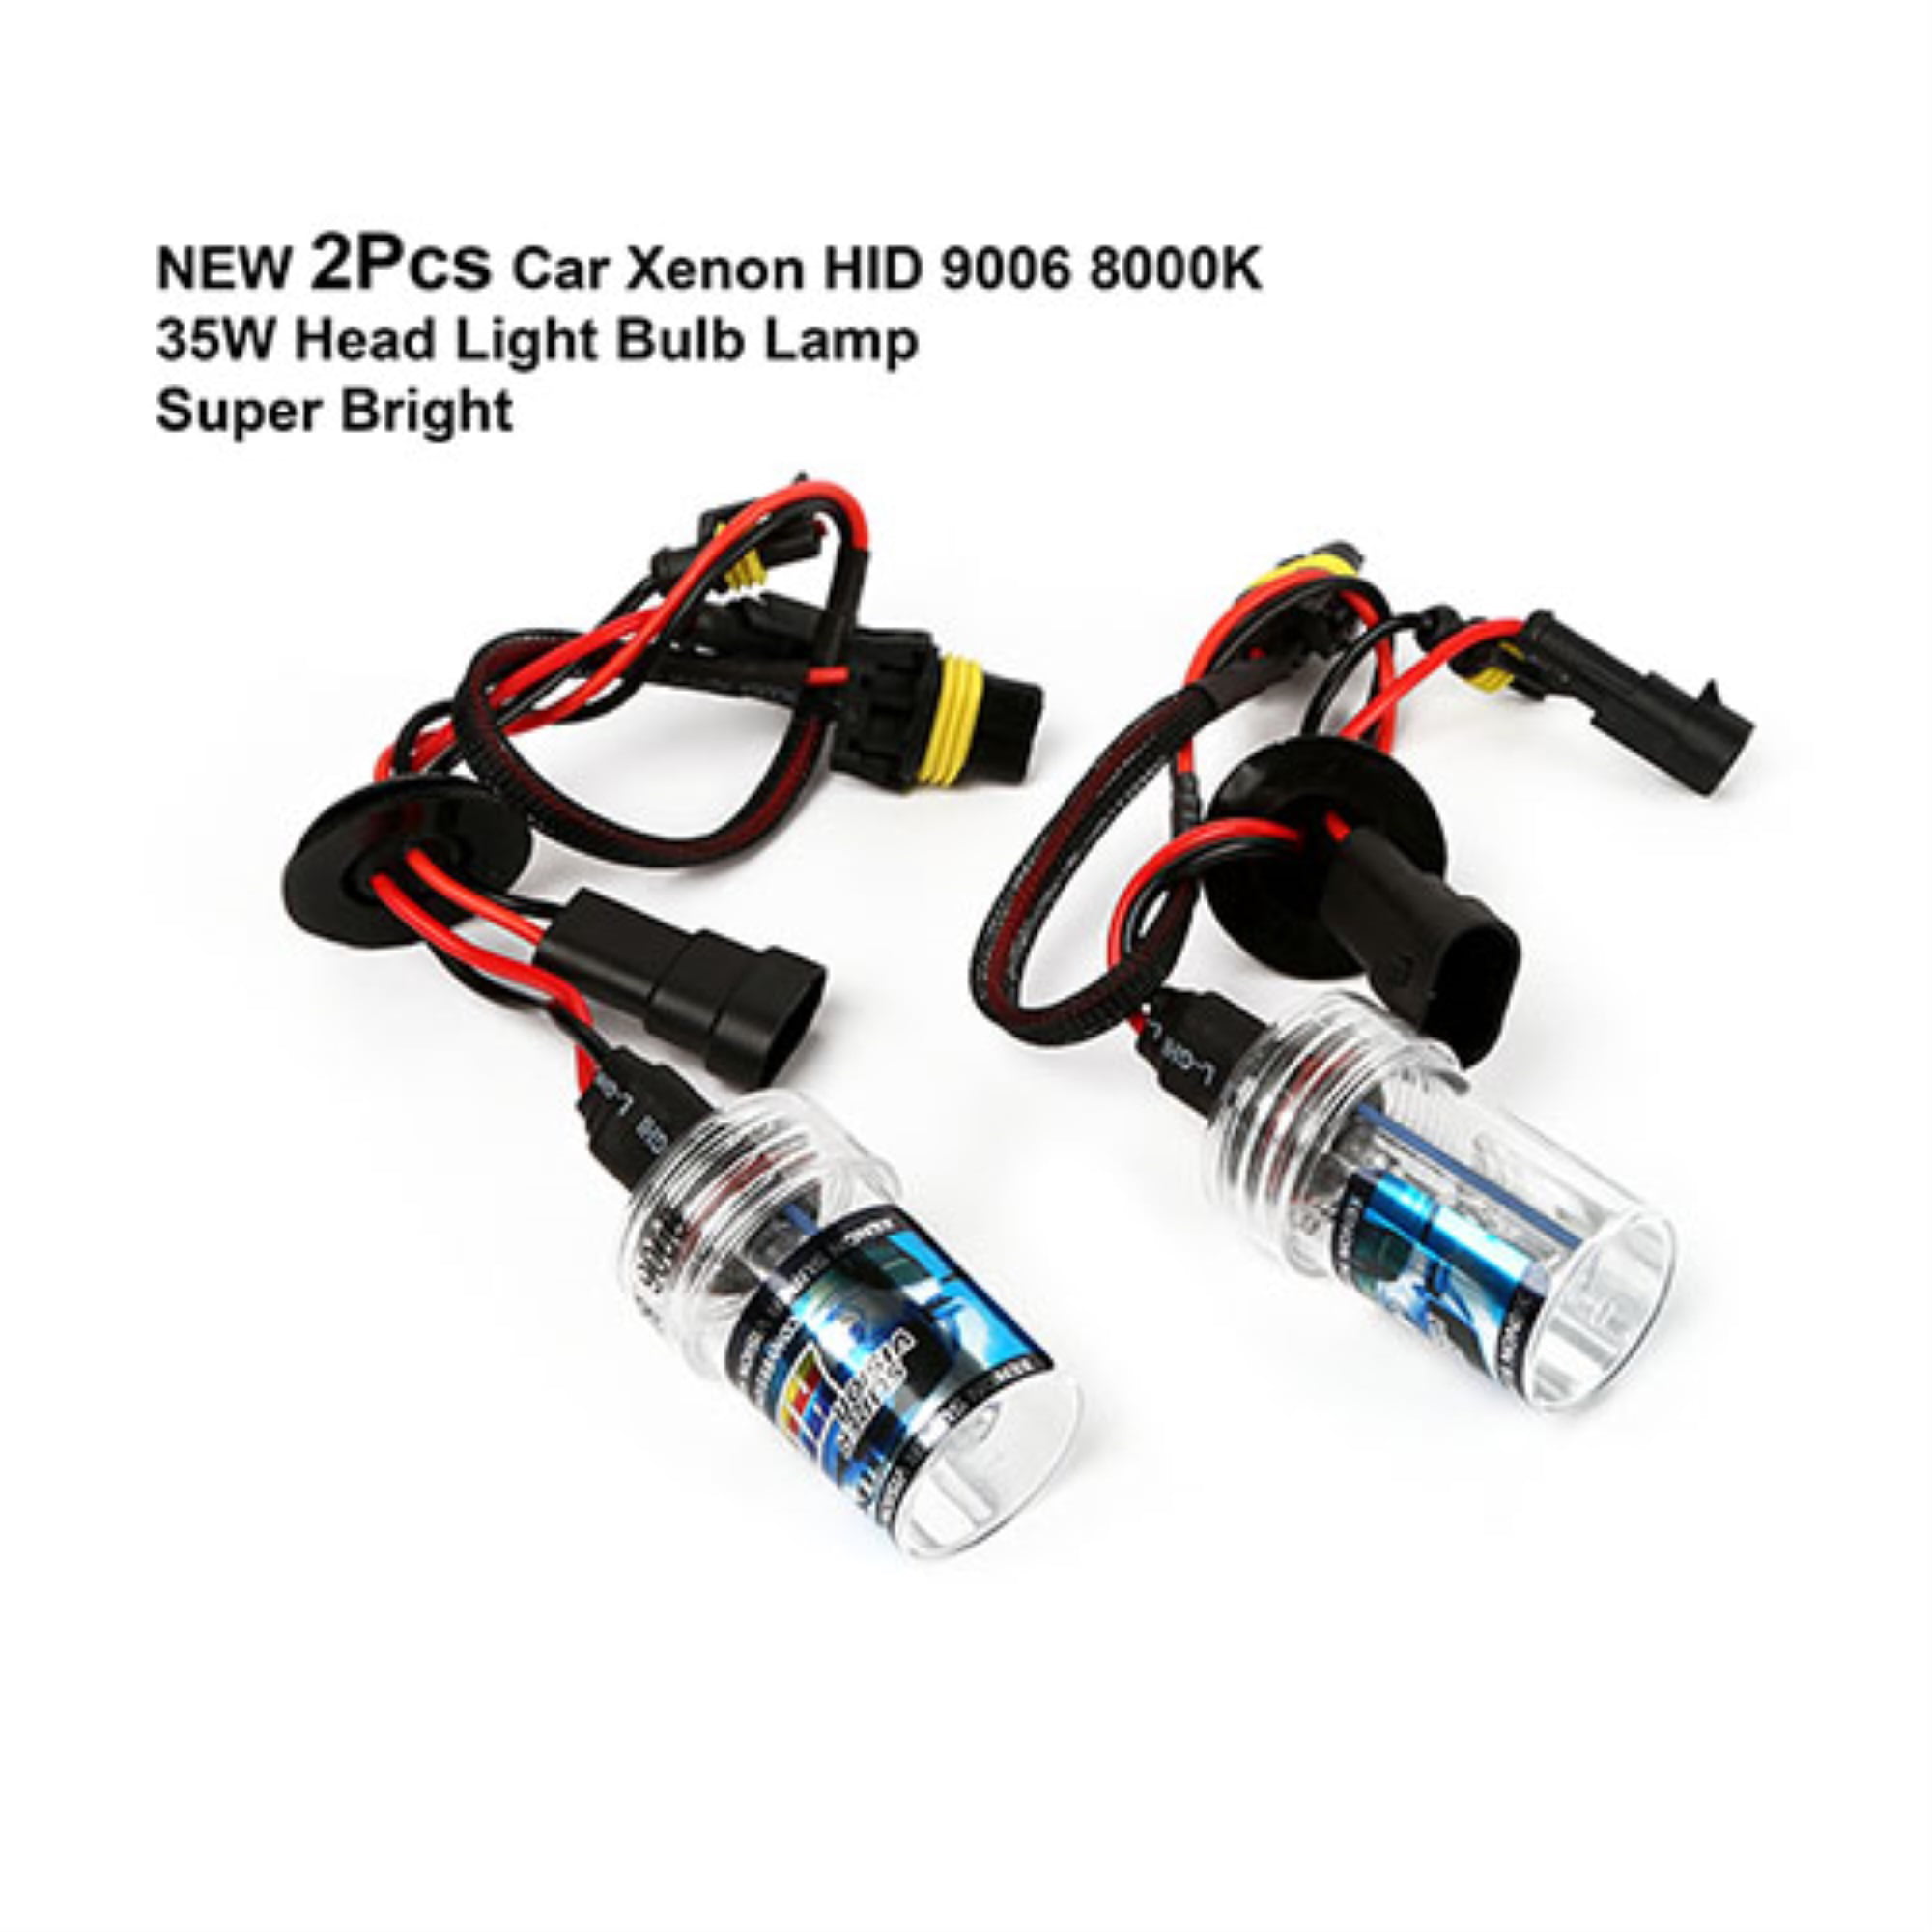 2 pcs Car Xenon Super Vision HID 9006 8000K 35W Headlight Lamp Replacement  Light